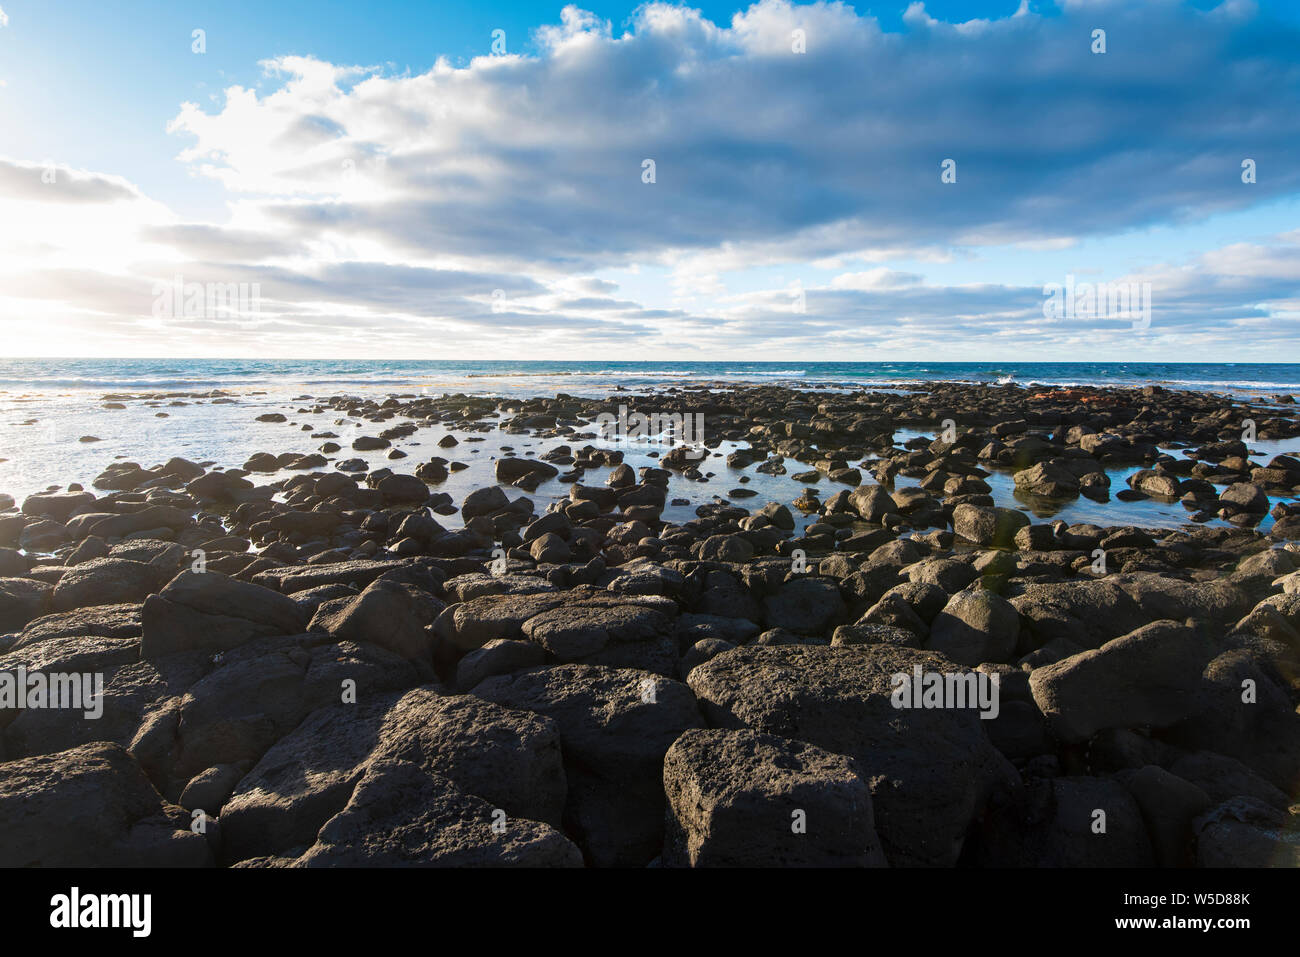 Seascape of rocks on beach at Port Fairy Victoria Australia taken early morning Stock Photo